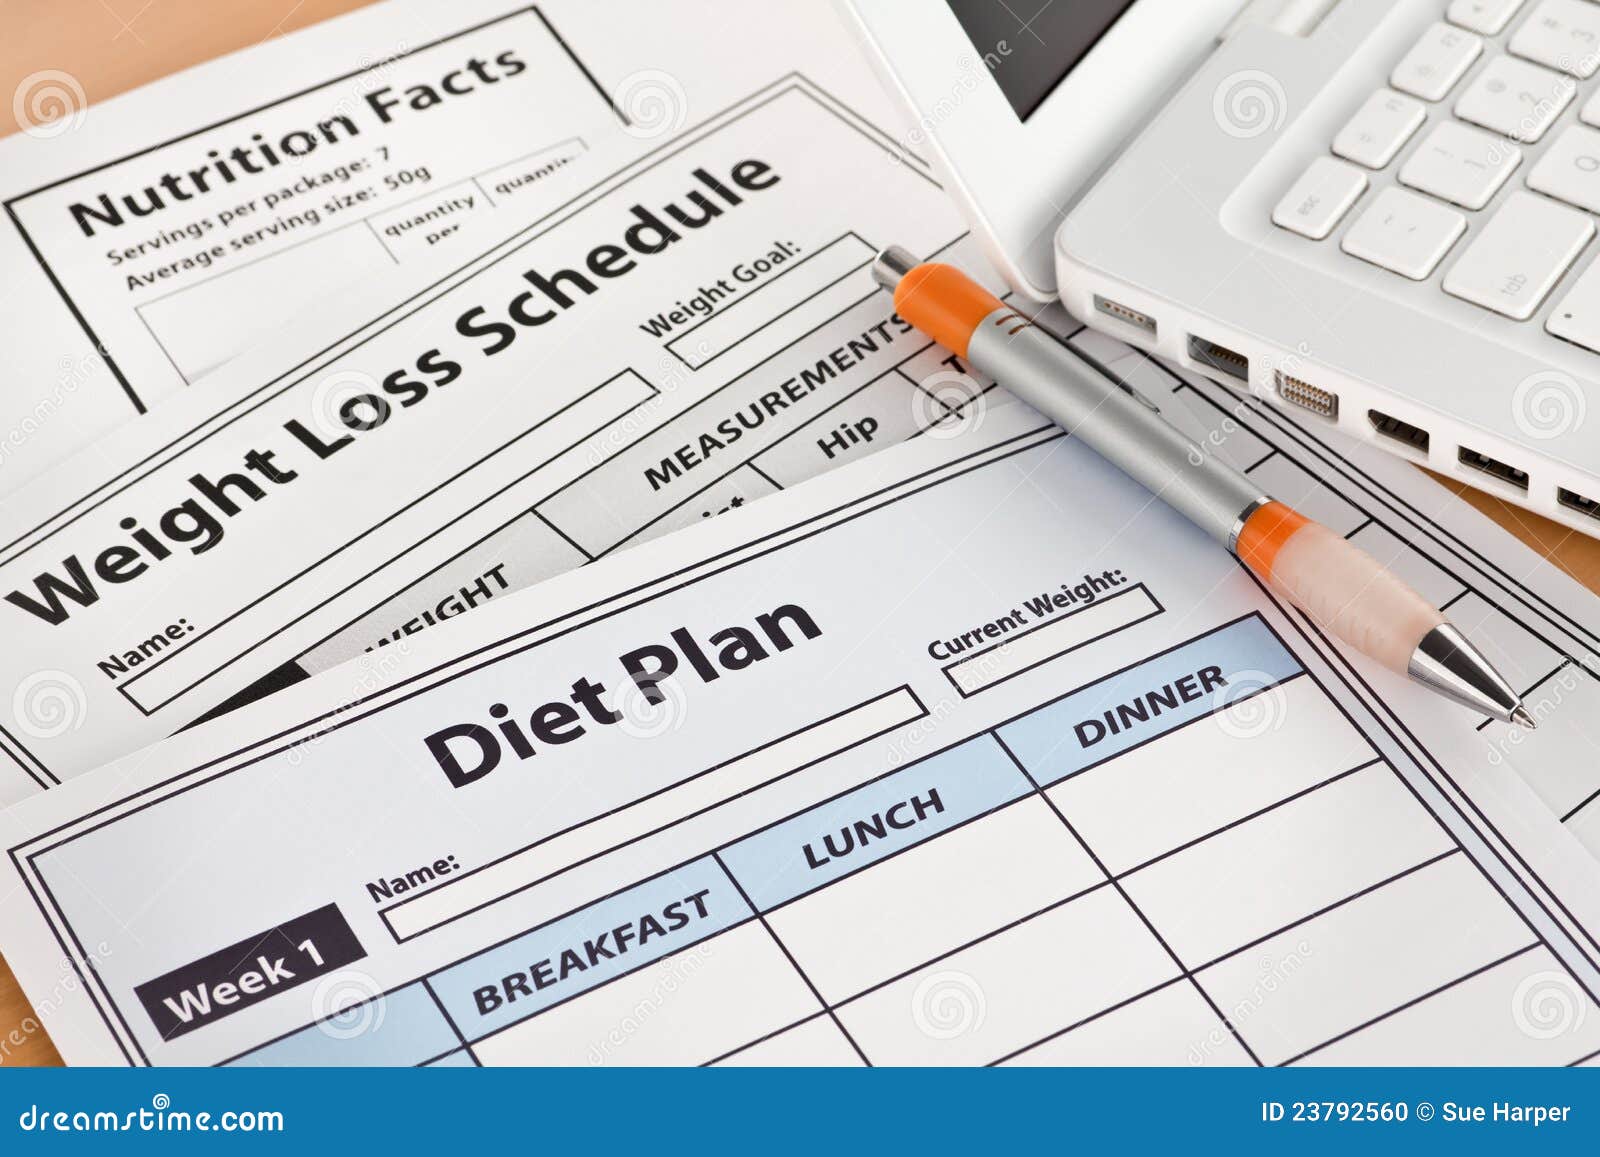 diet plan and weightloss schedule by laptop